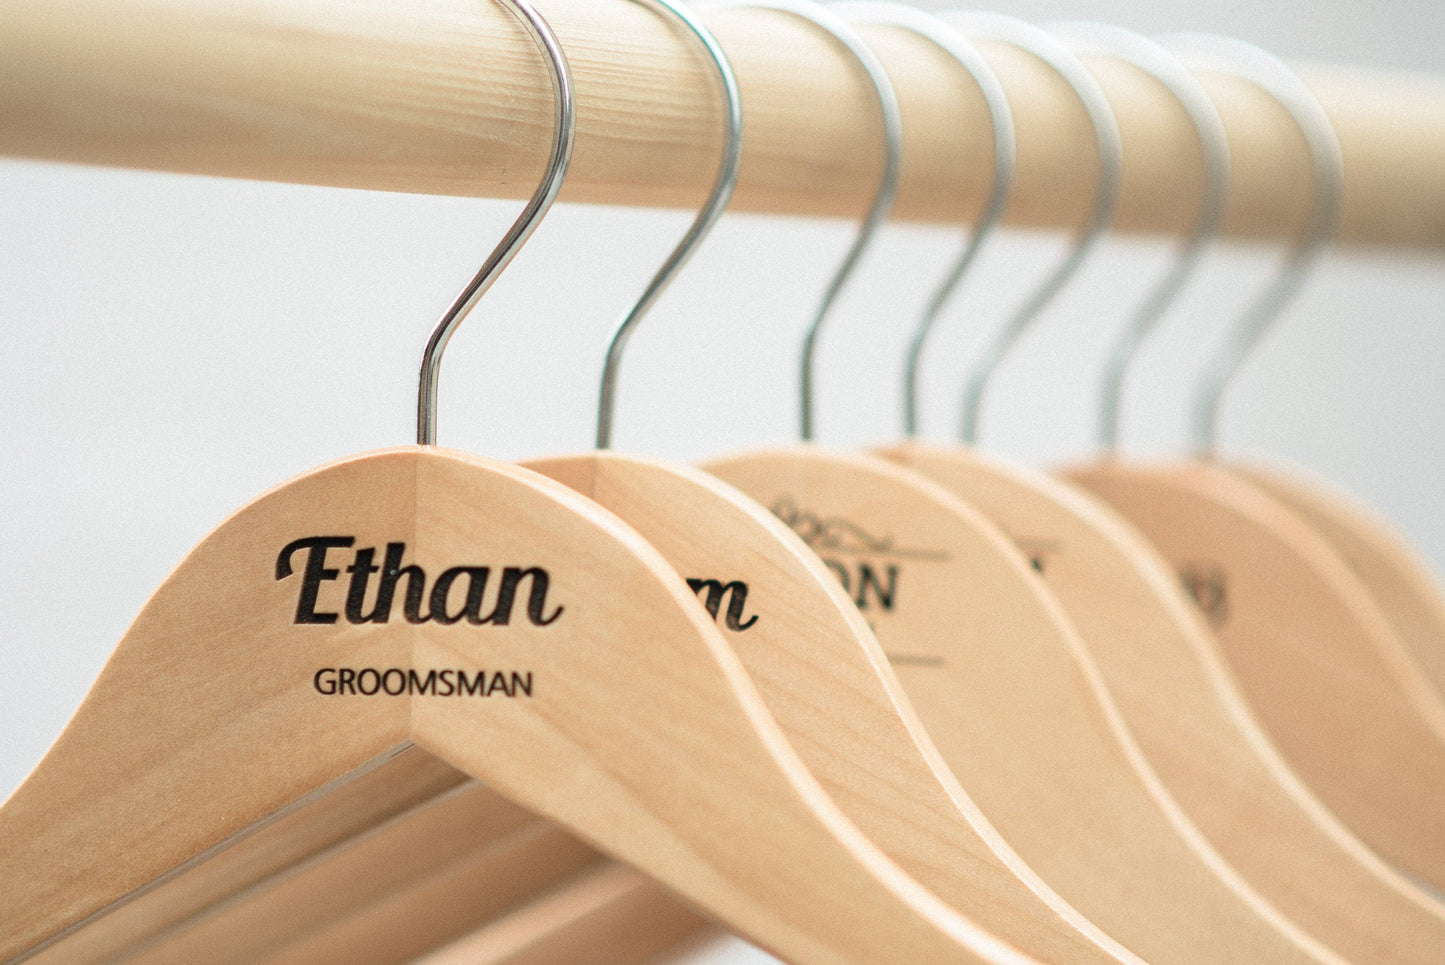 Groomsman personalized wooden hangers